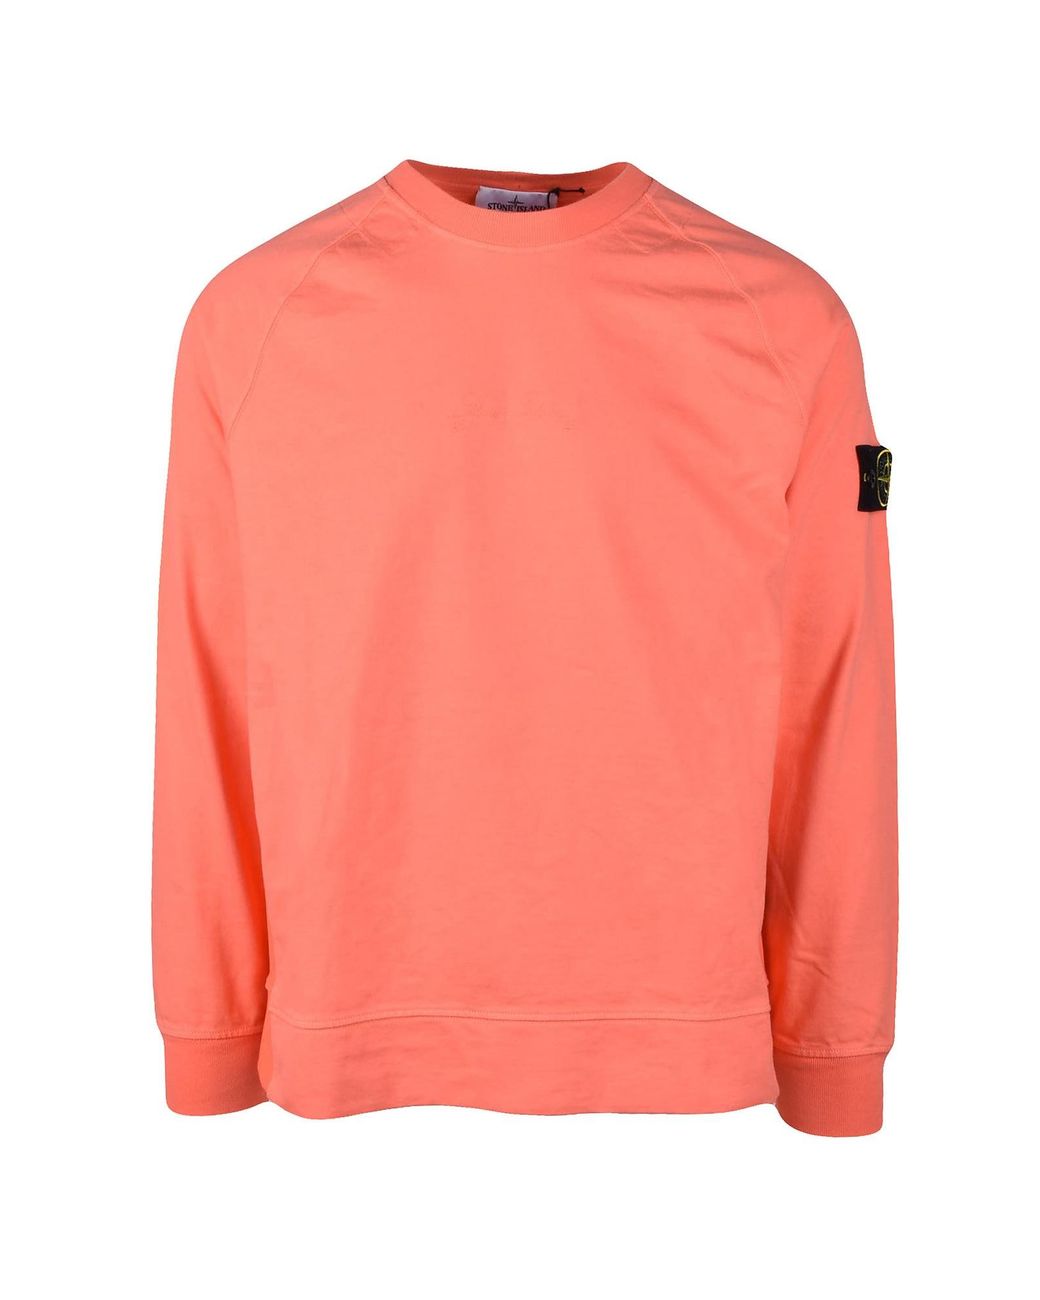 Stone Island Orange Sweatshirt in Pink for Men | Lyst